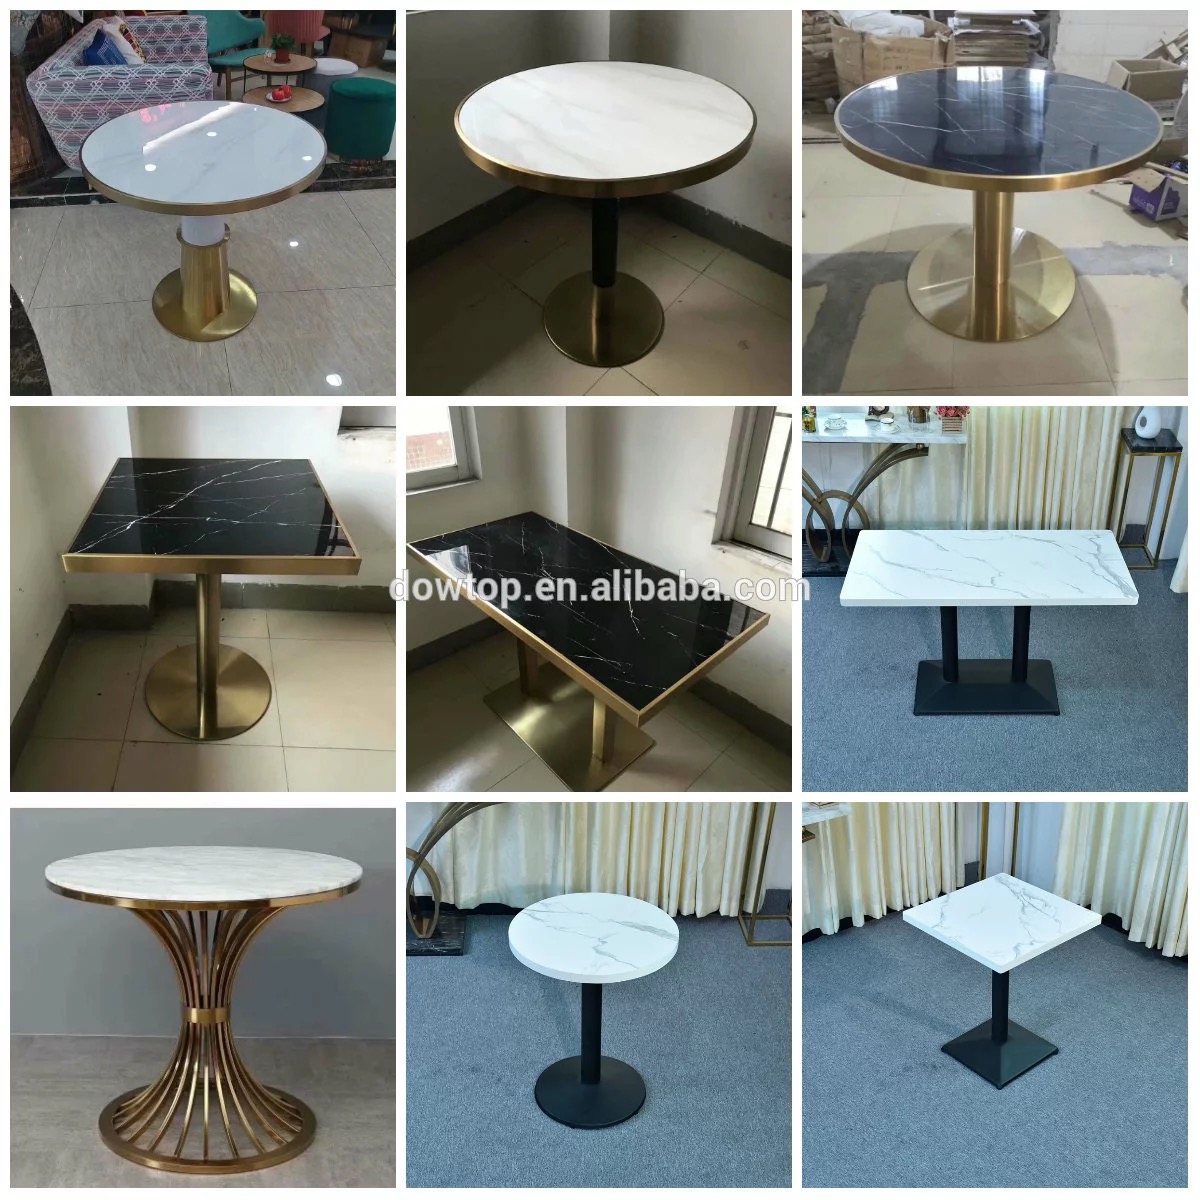 dining table designs.jpeg